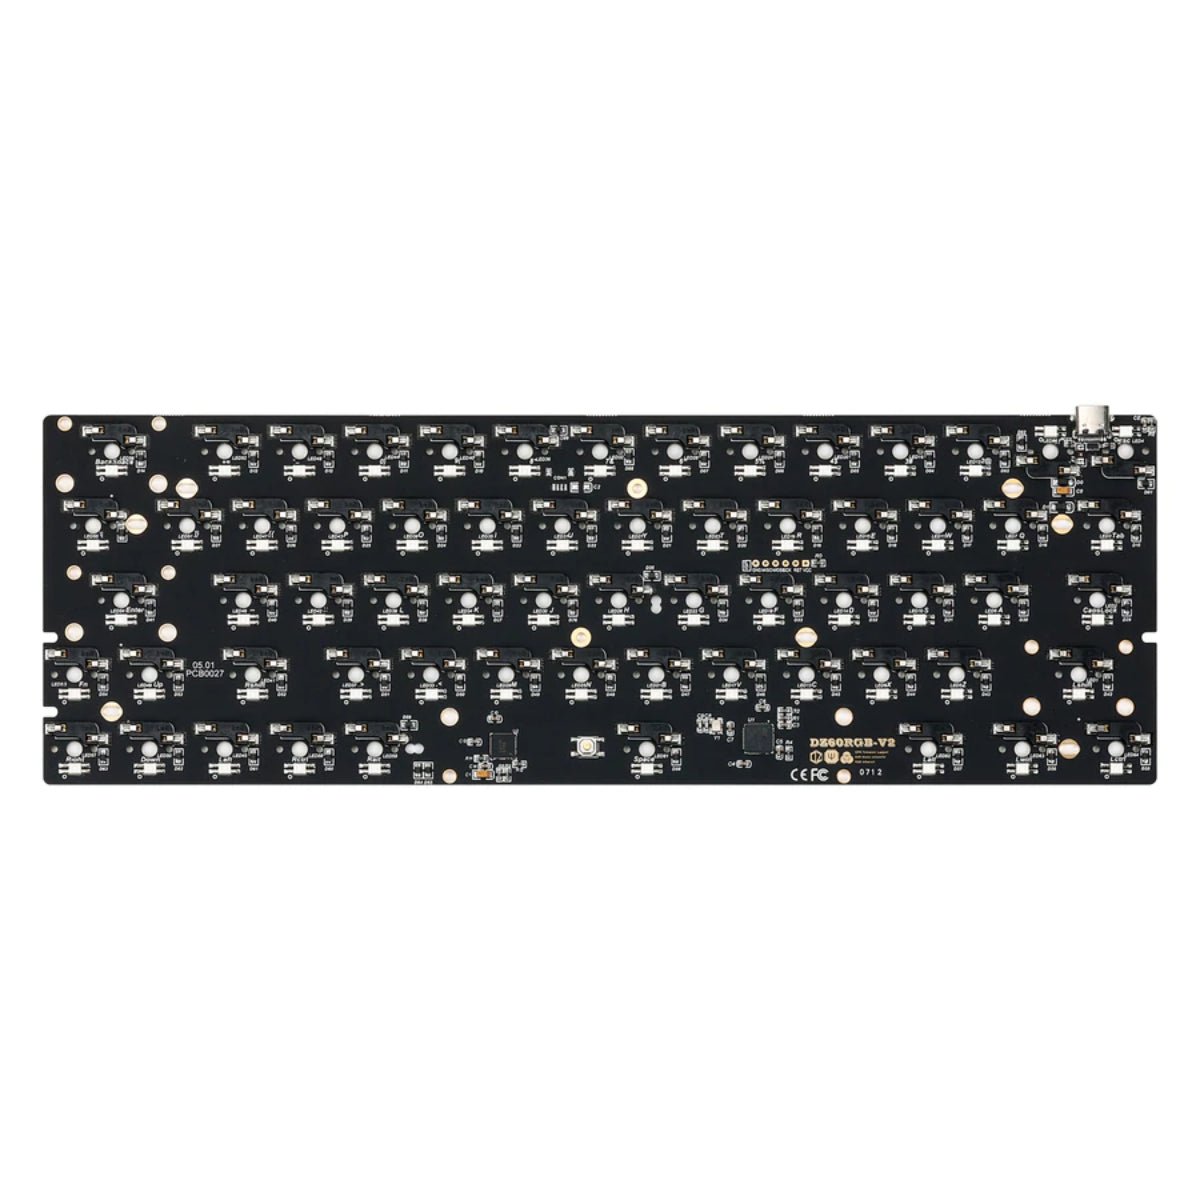 KBD Fans DZ60 RGB Hot-Swap Custom Keyboard PCB - Store 974 | ستور ٩٧٤